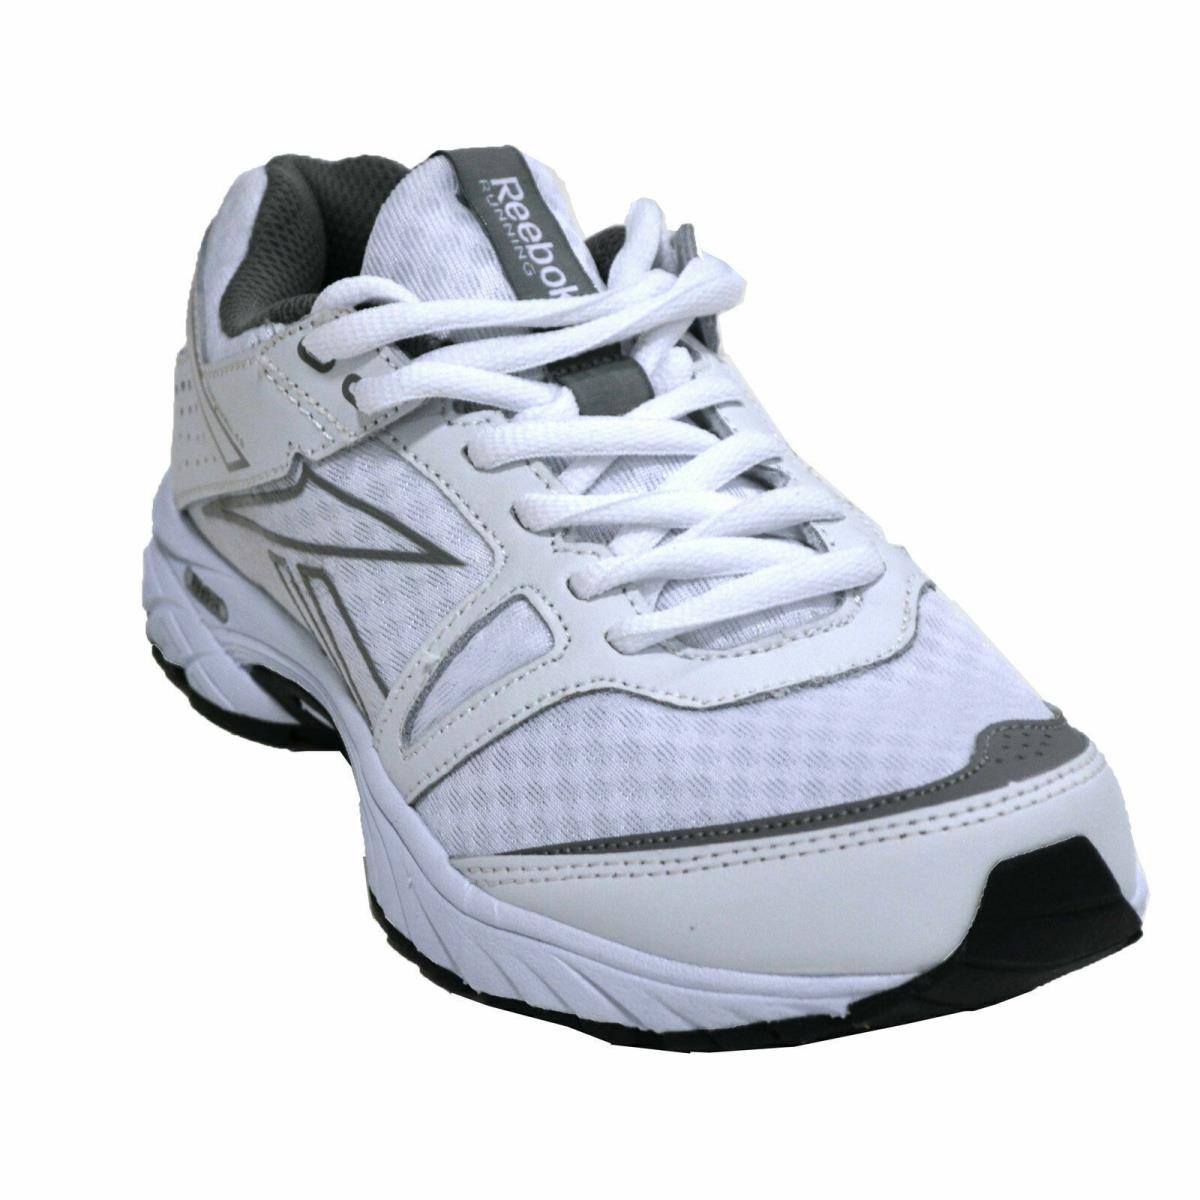 Reebok Womens Running Shoes Triplehall White Black Athletic Exercise Sneaker 6